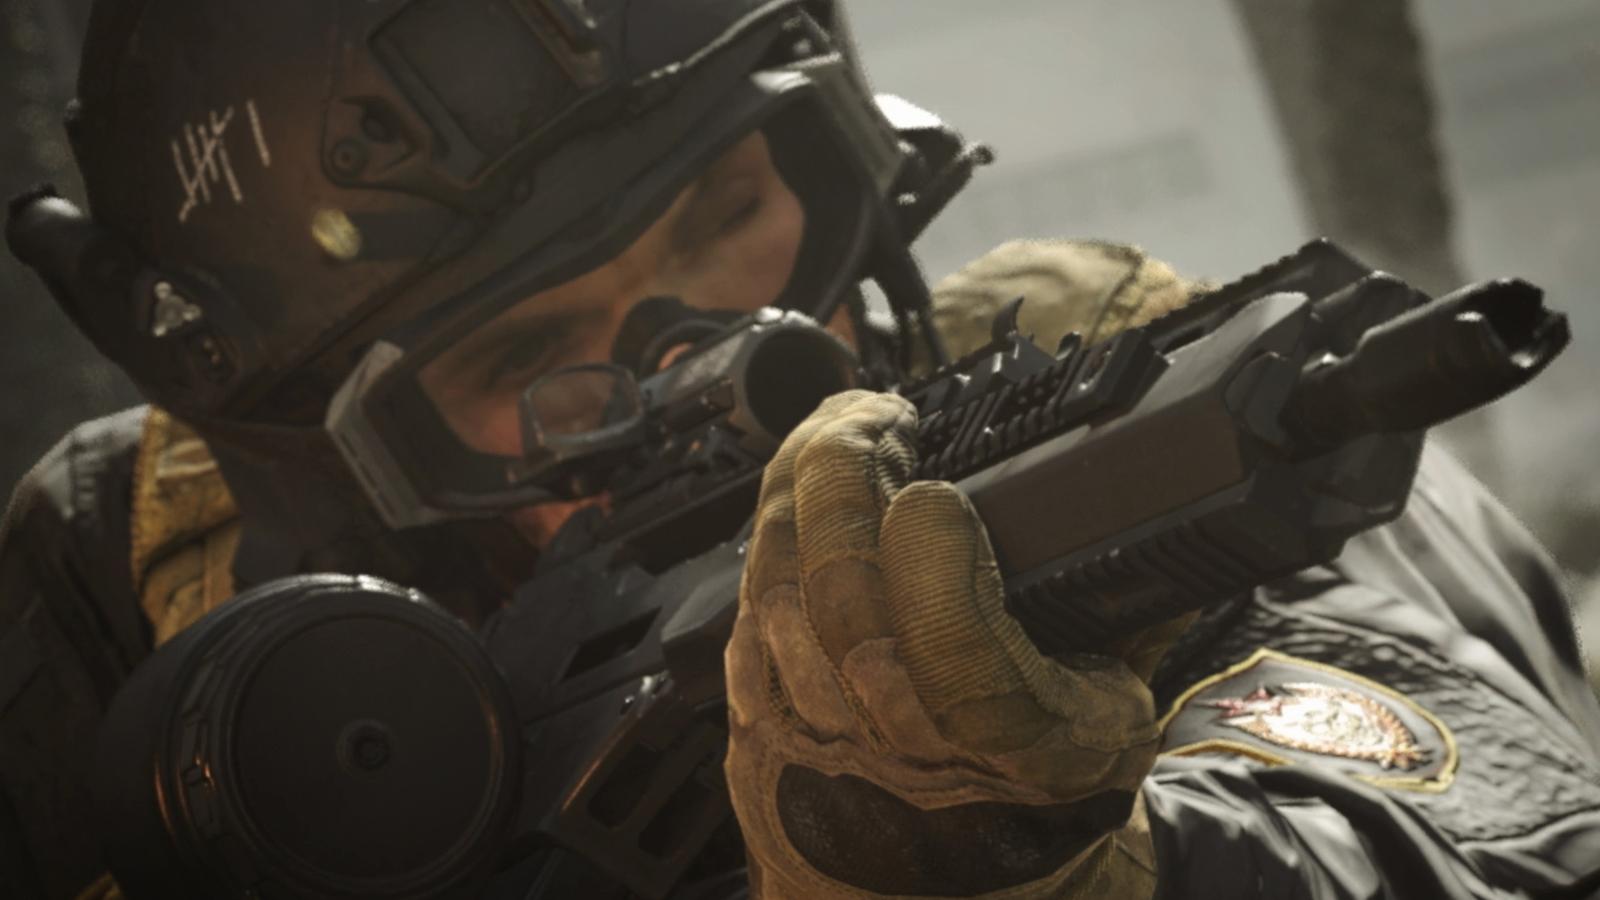 Holger-26 LMG from Modern Warfare (2019) new gun reveal.